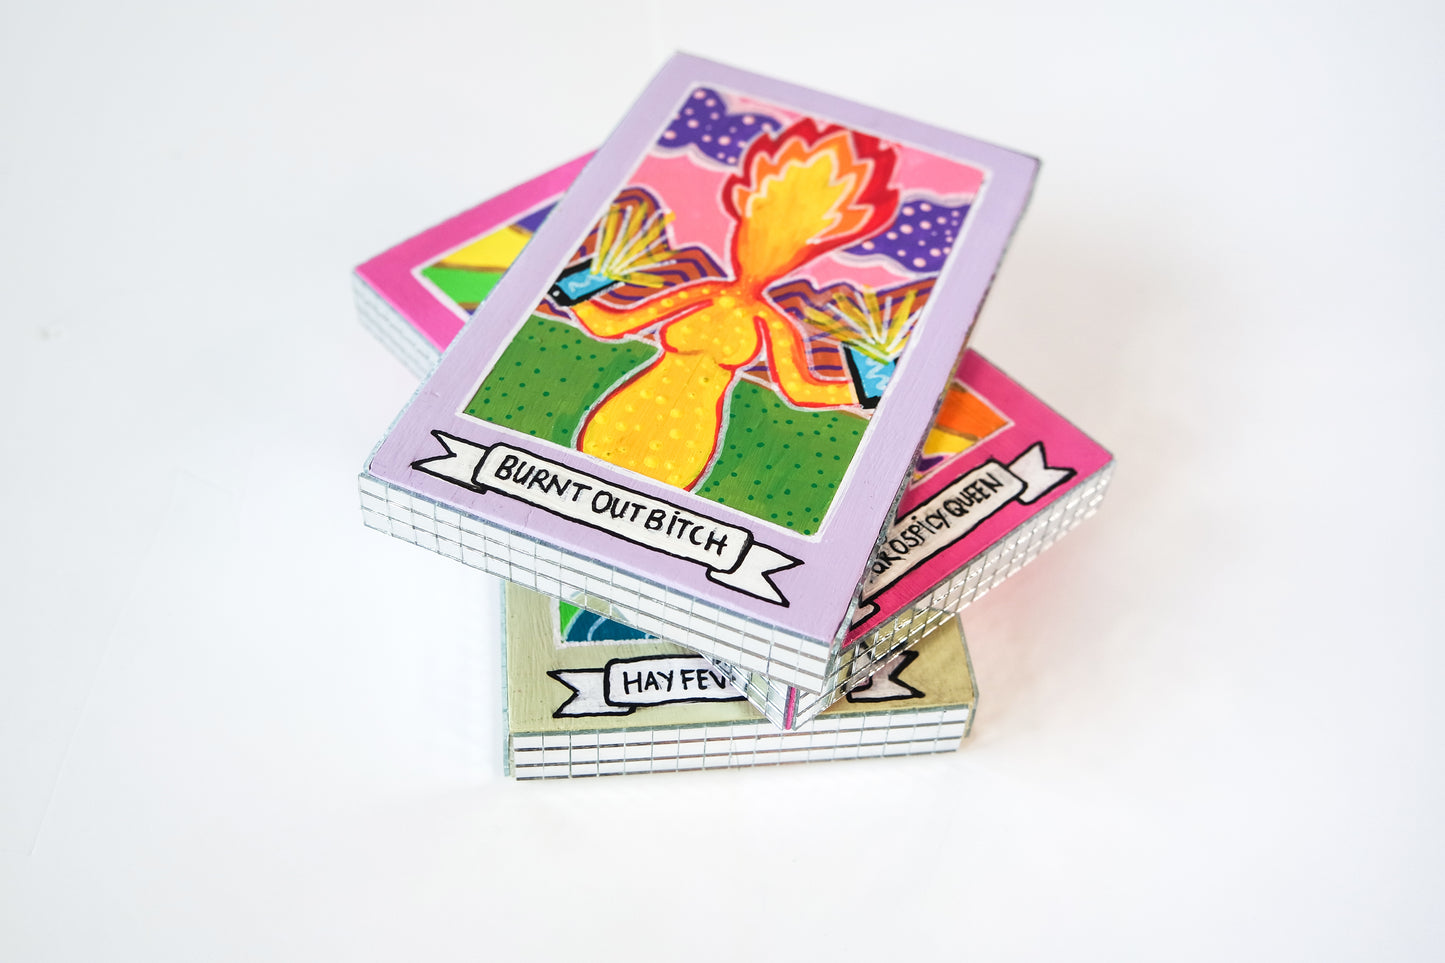 Tarot card style mini artworks